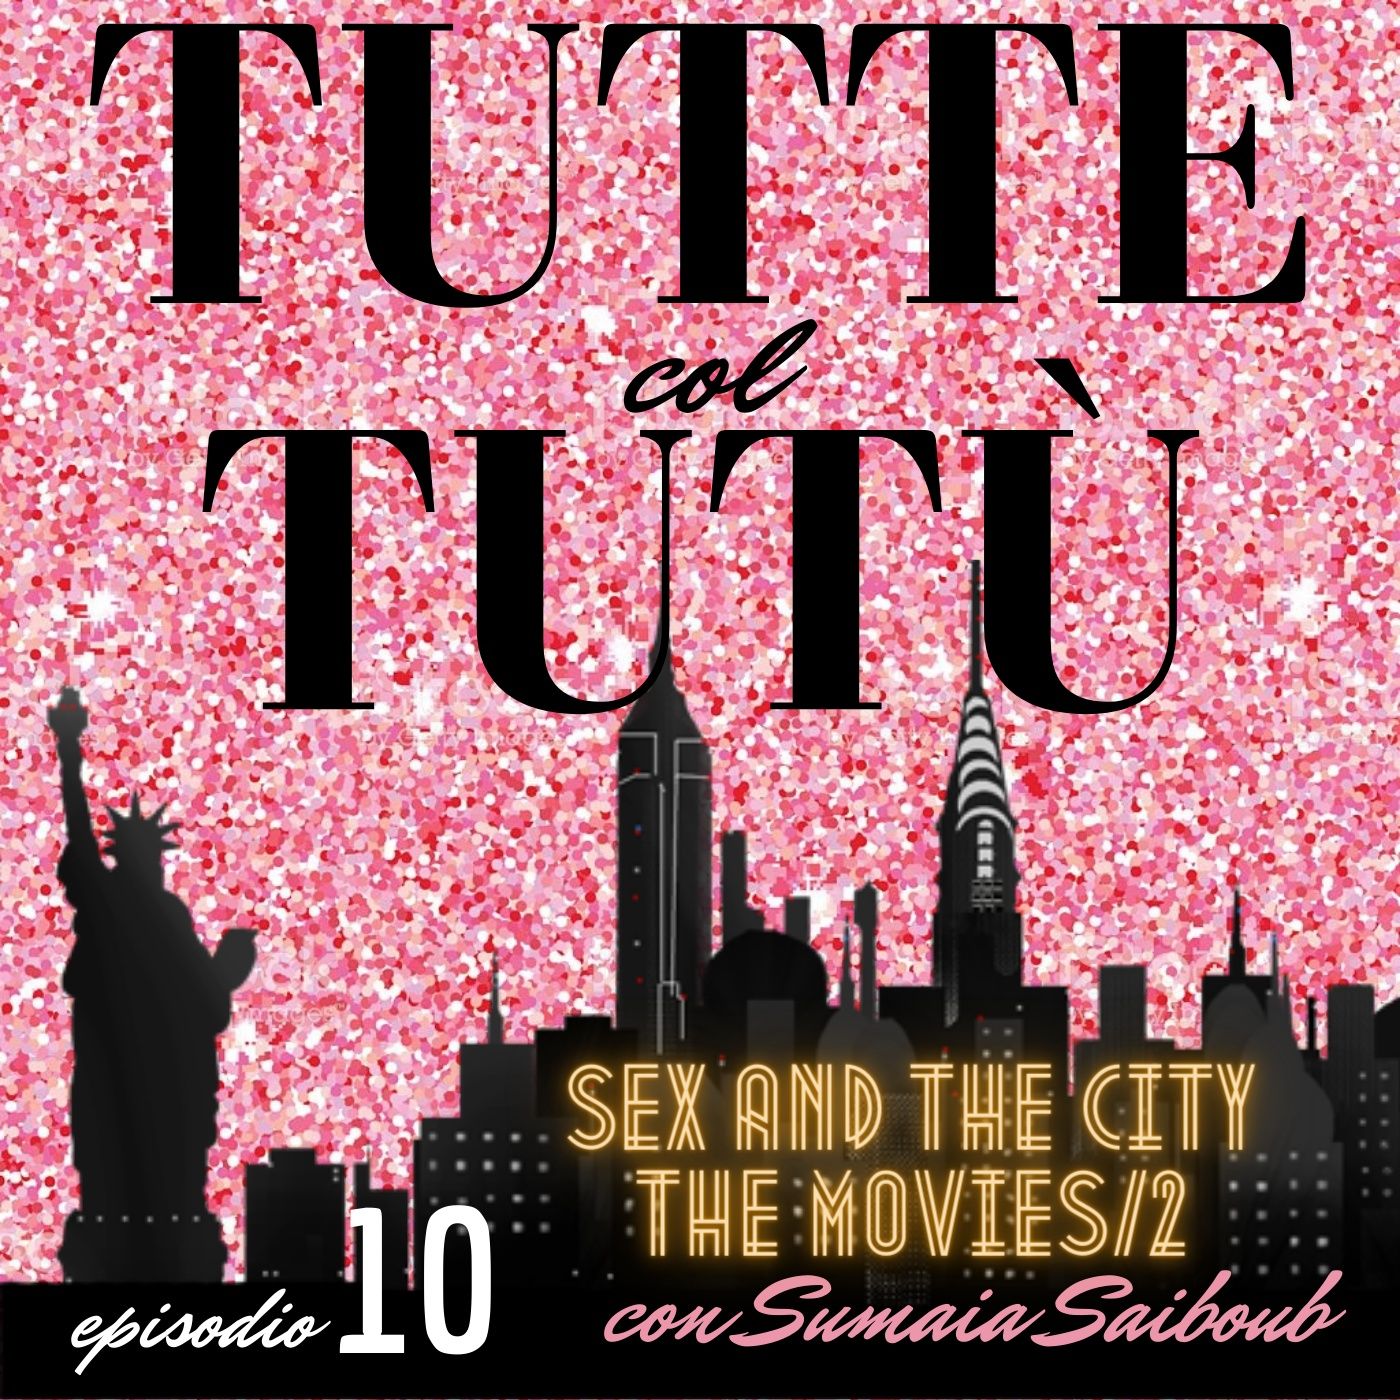 Episodio 10: Sex and the City/The Second Movie - con Sumaia Saiboub